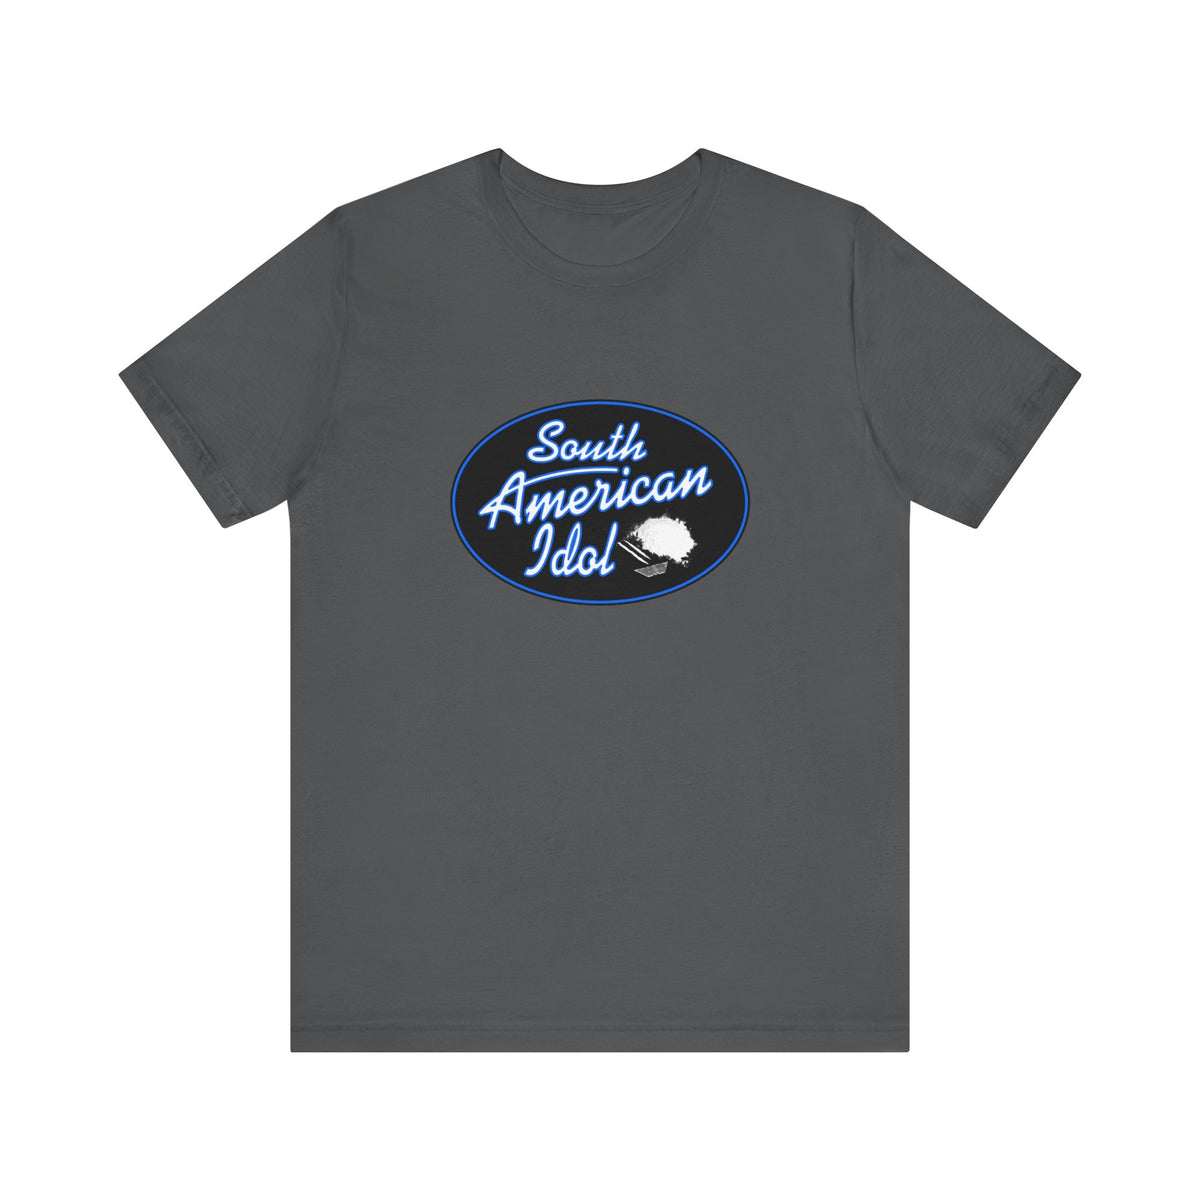 South American Idol - Men's T-Shirt